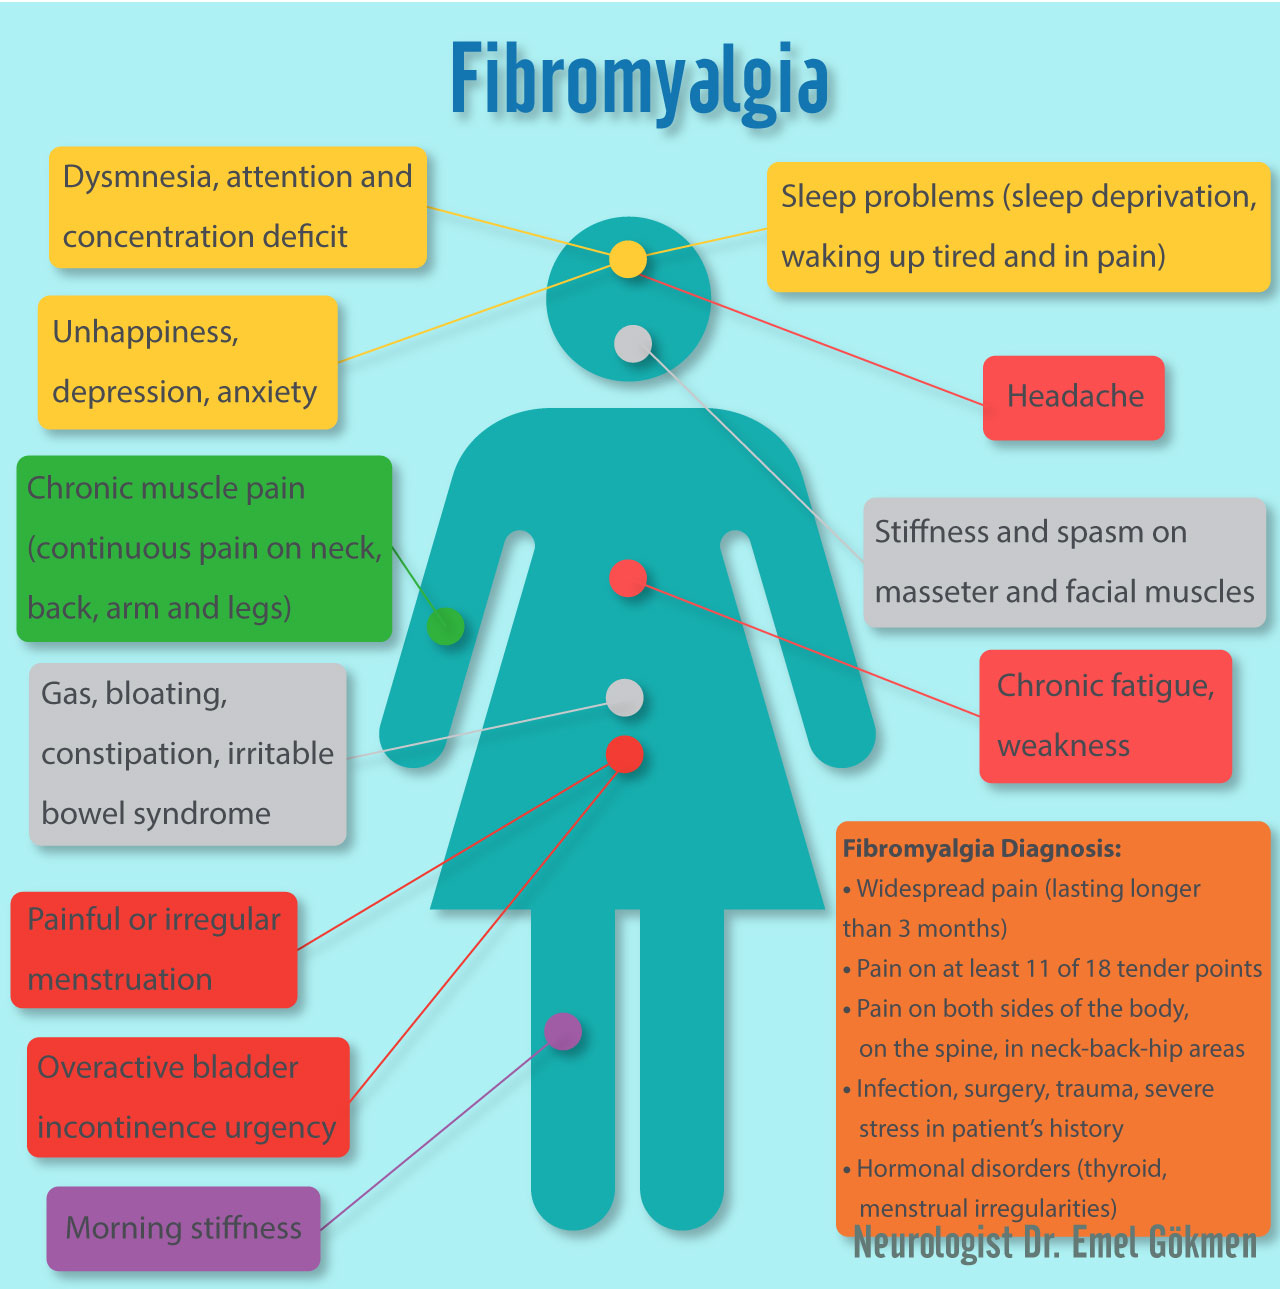 visual representation of fibromyalgia